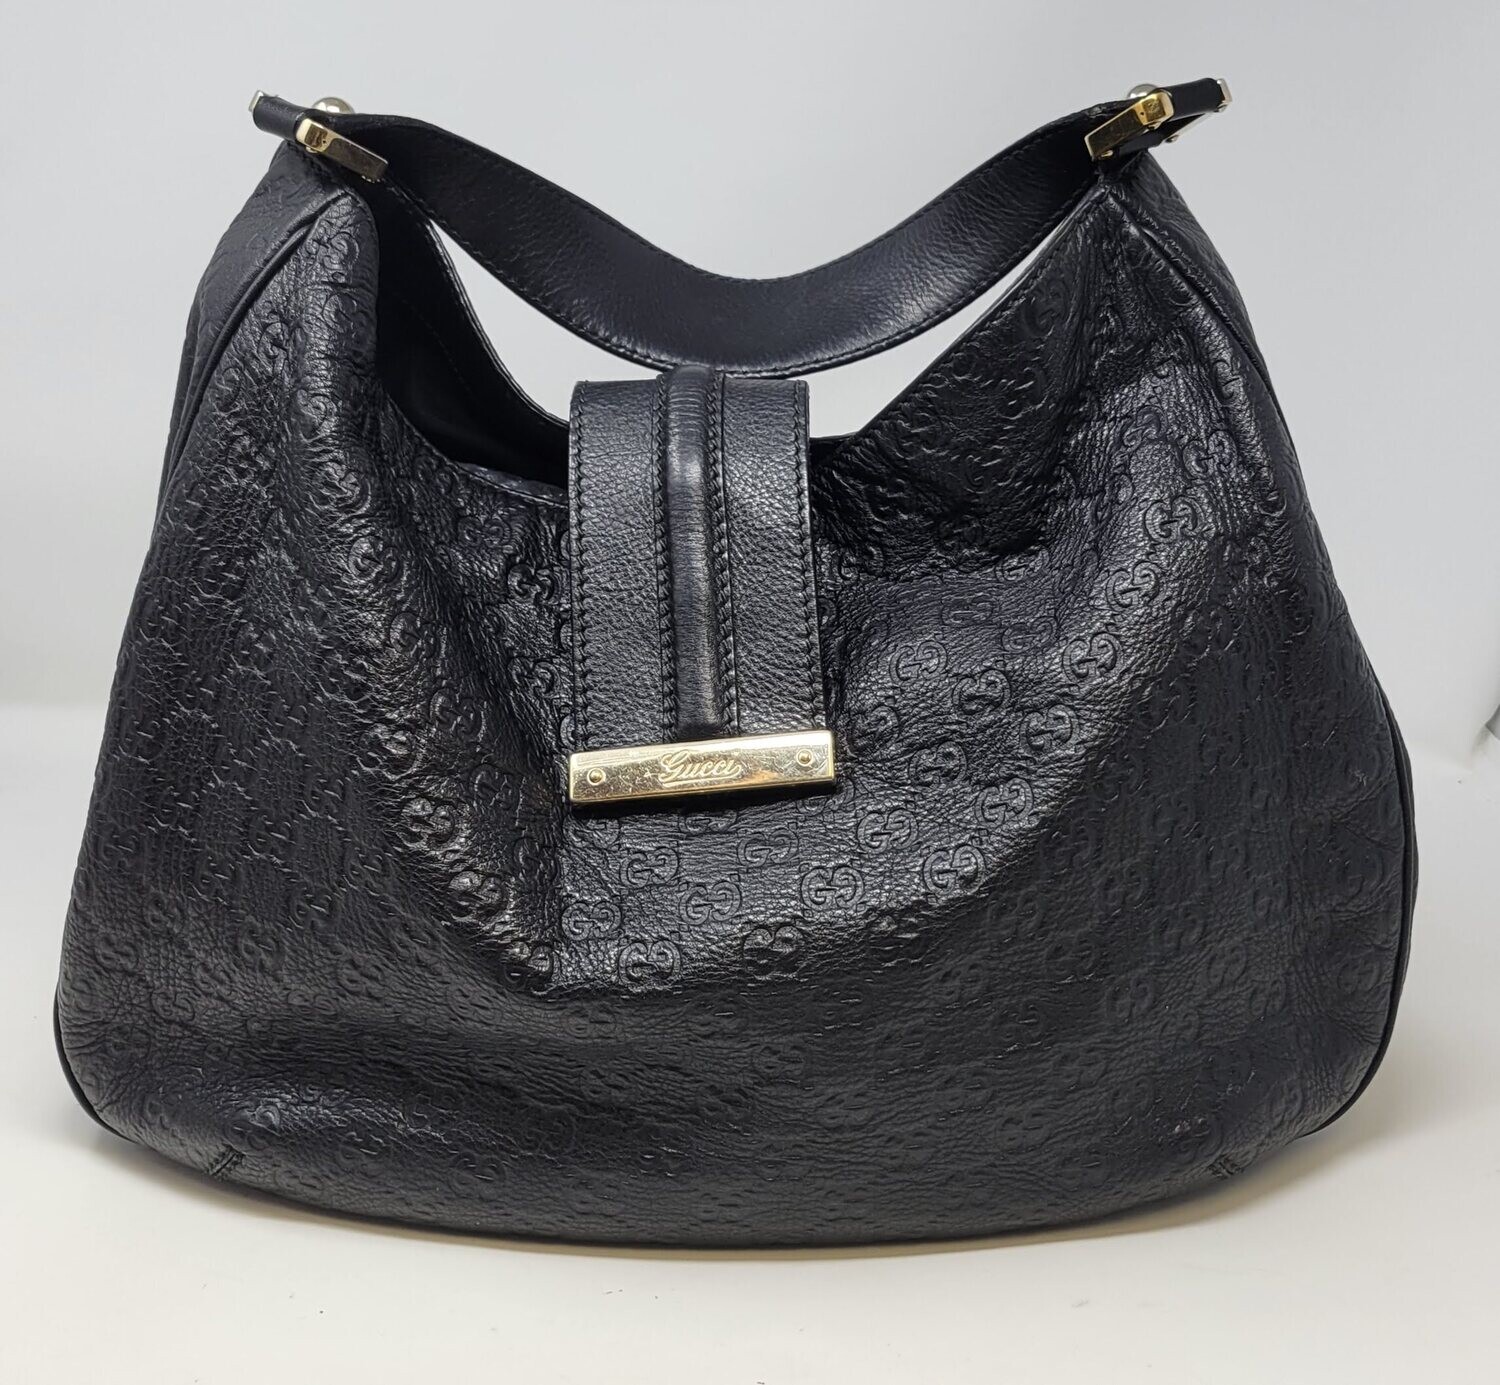 Gucci Black Leather Guccisma Hobo Bag